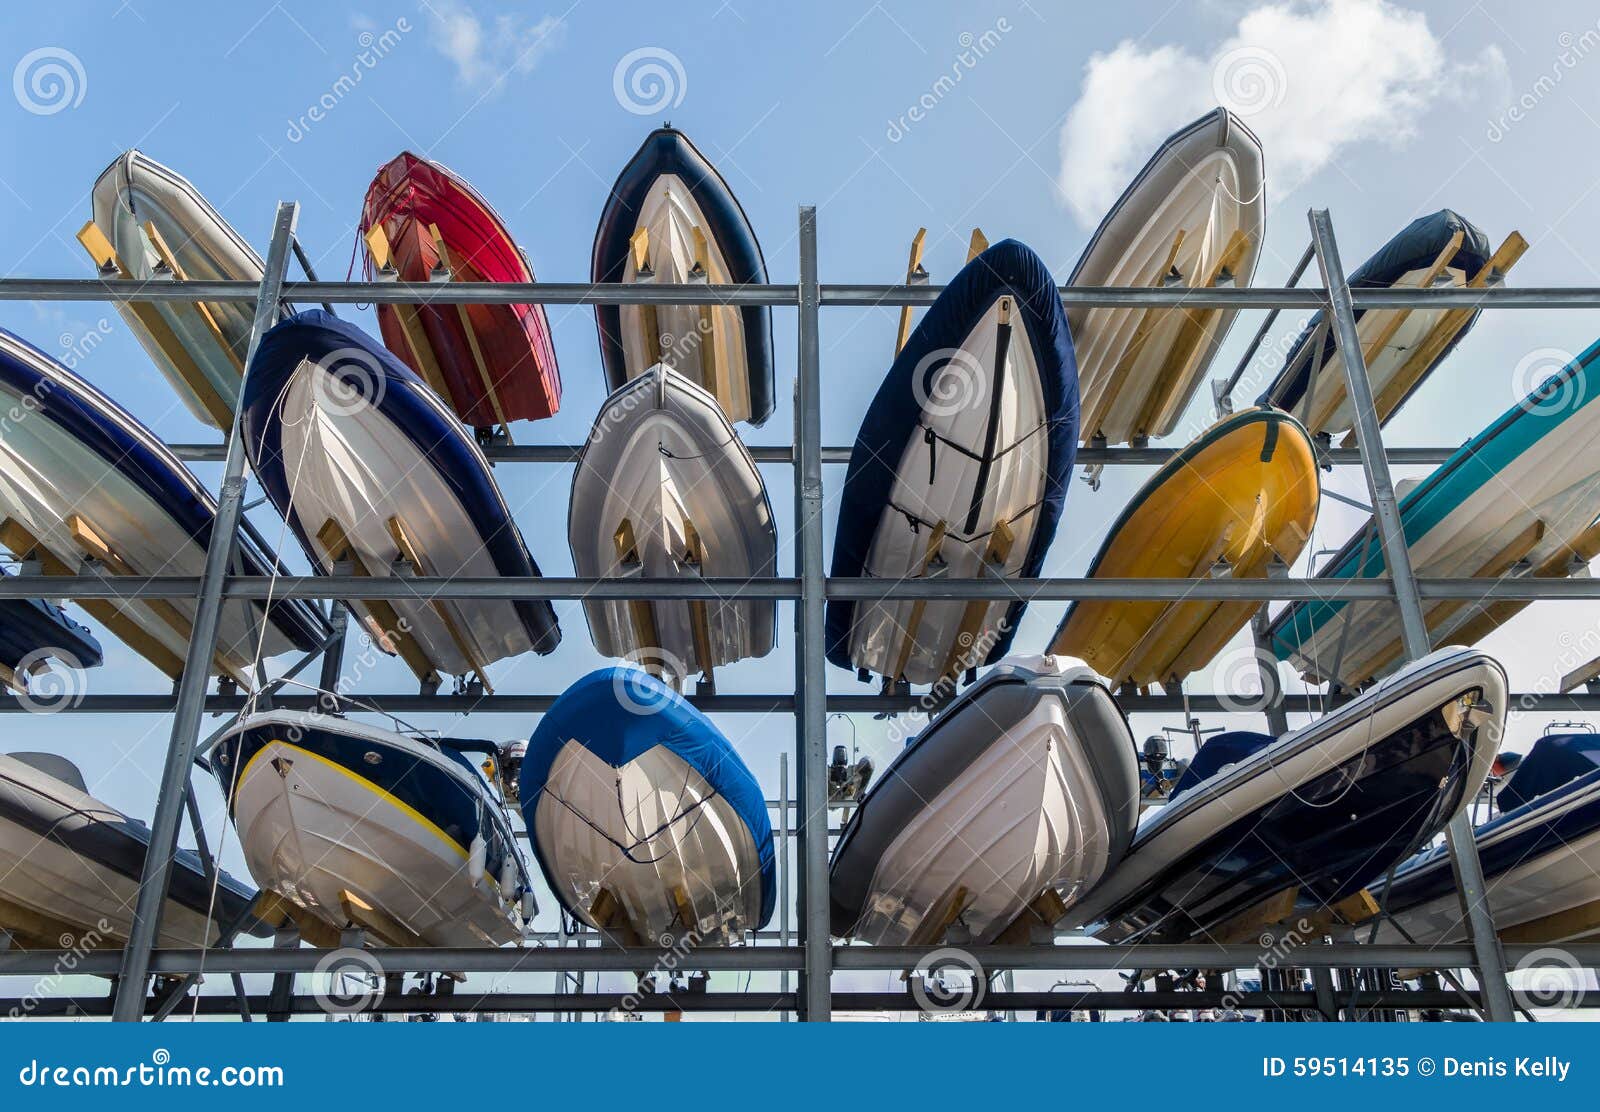 boat storage rack